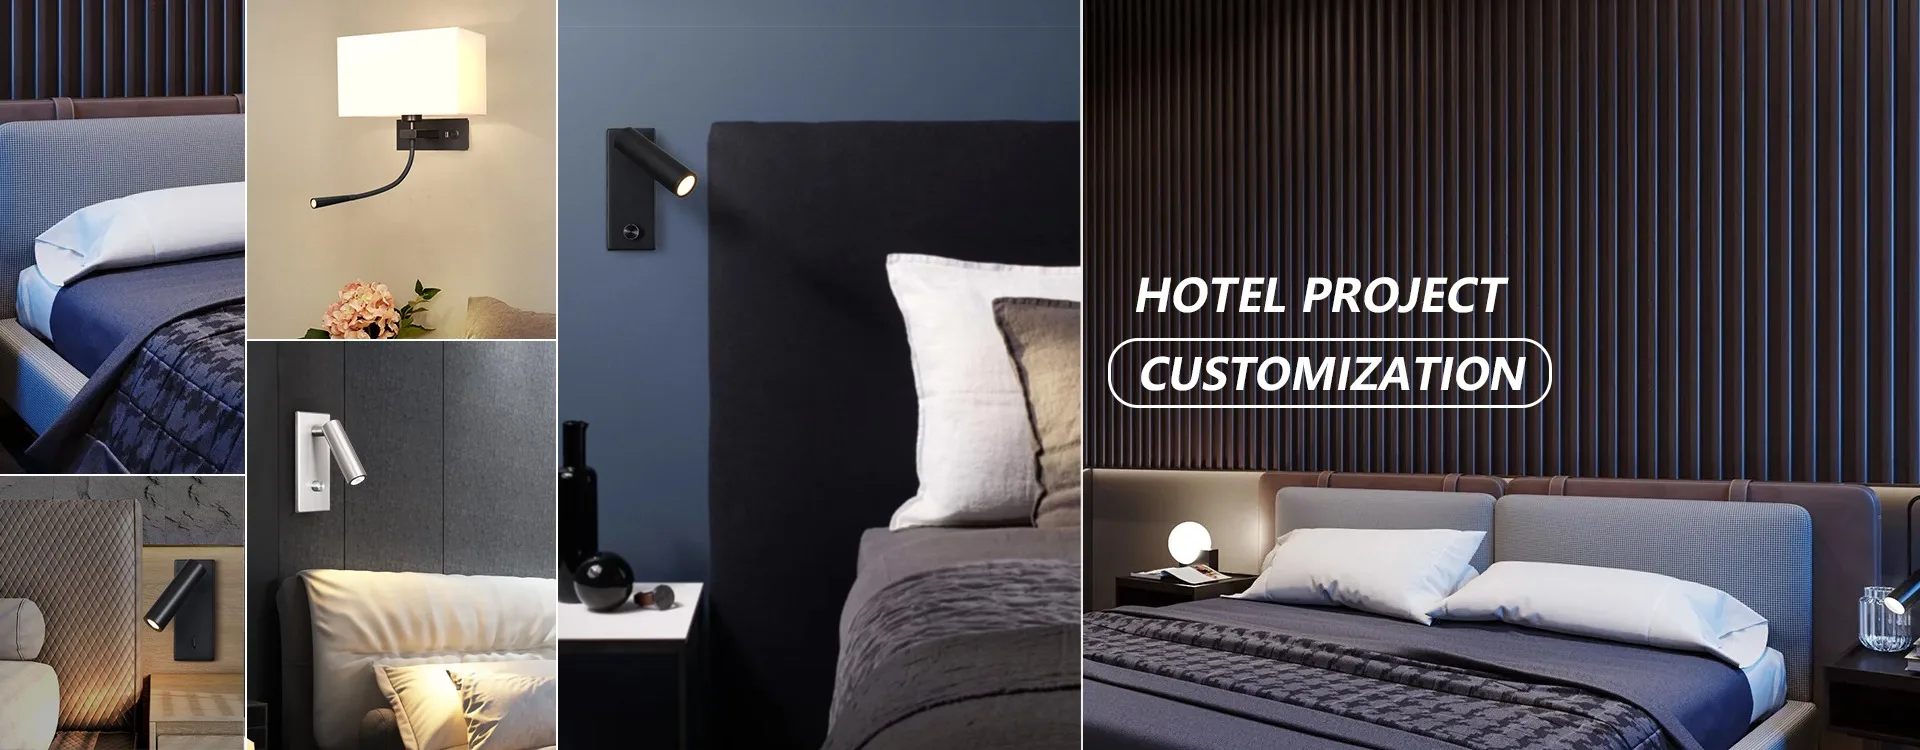 Hotel project customization